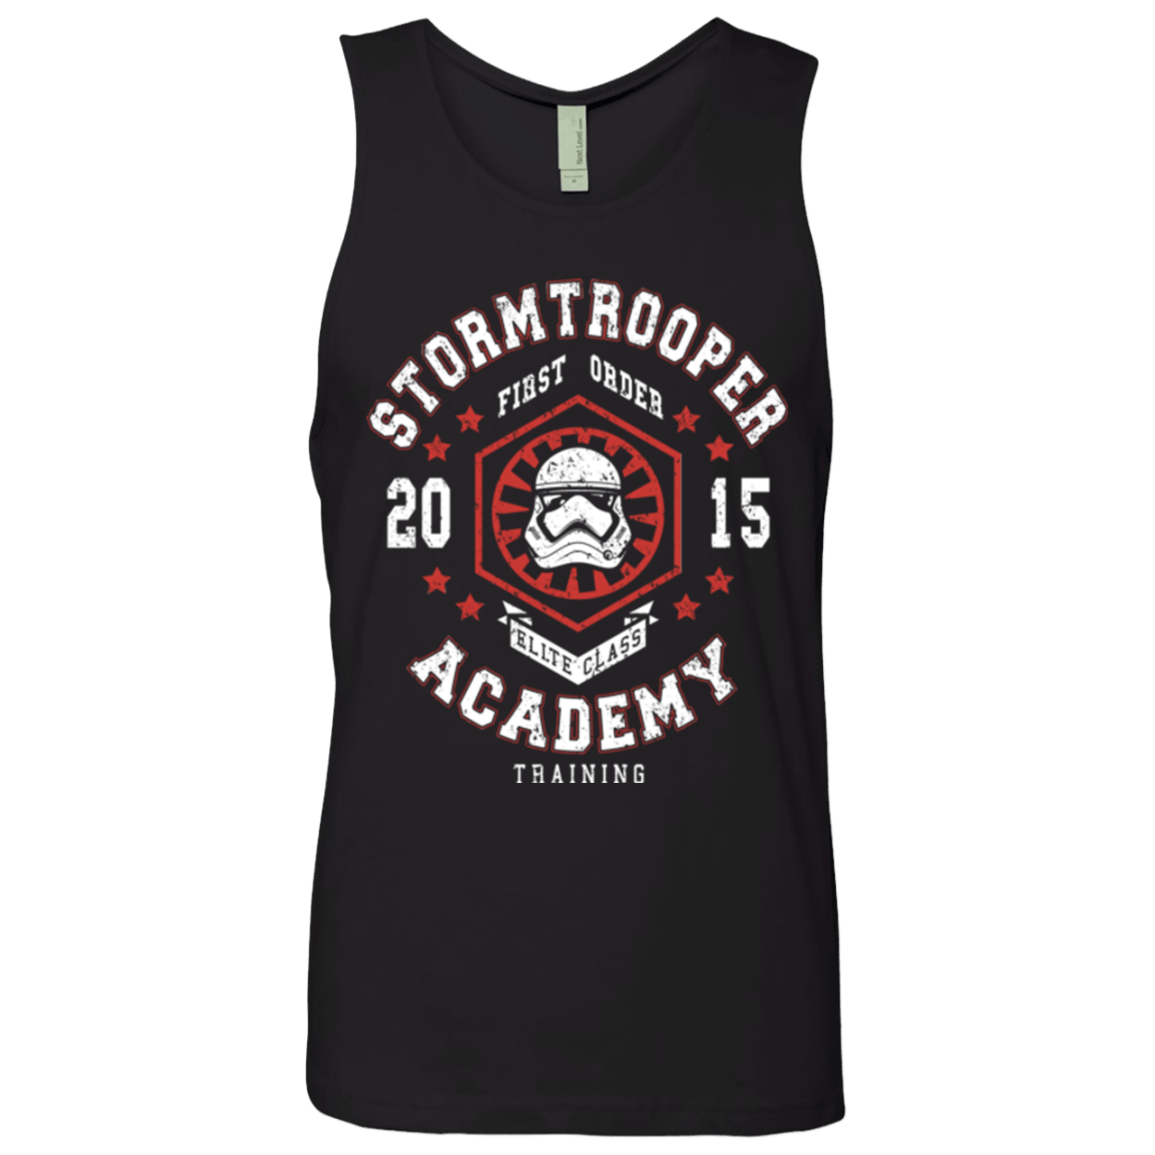 T-Shirts Black / Small Stormtrooper Academy 15 Men's Premium Tank Top